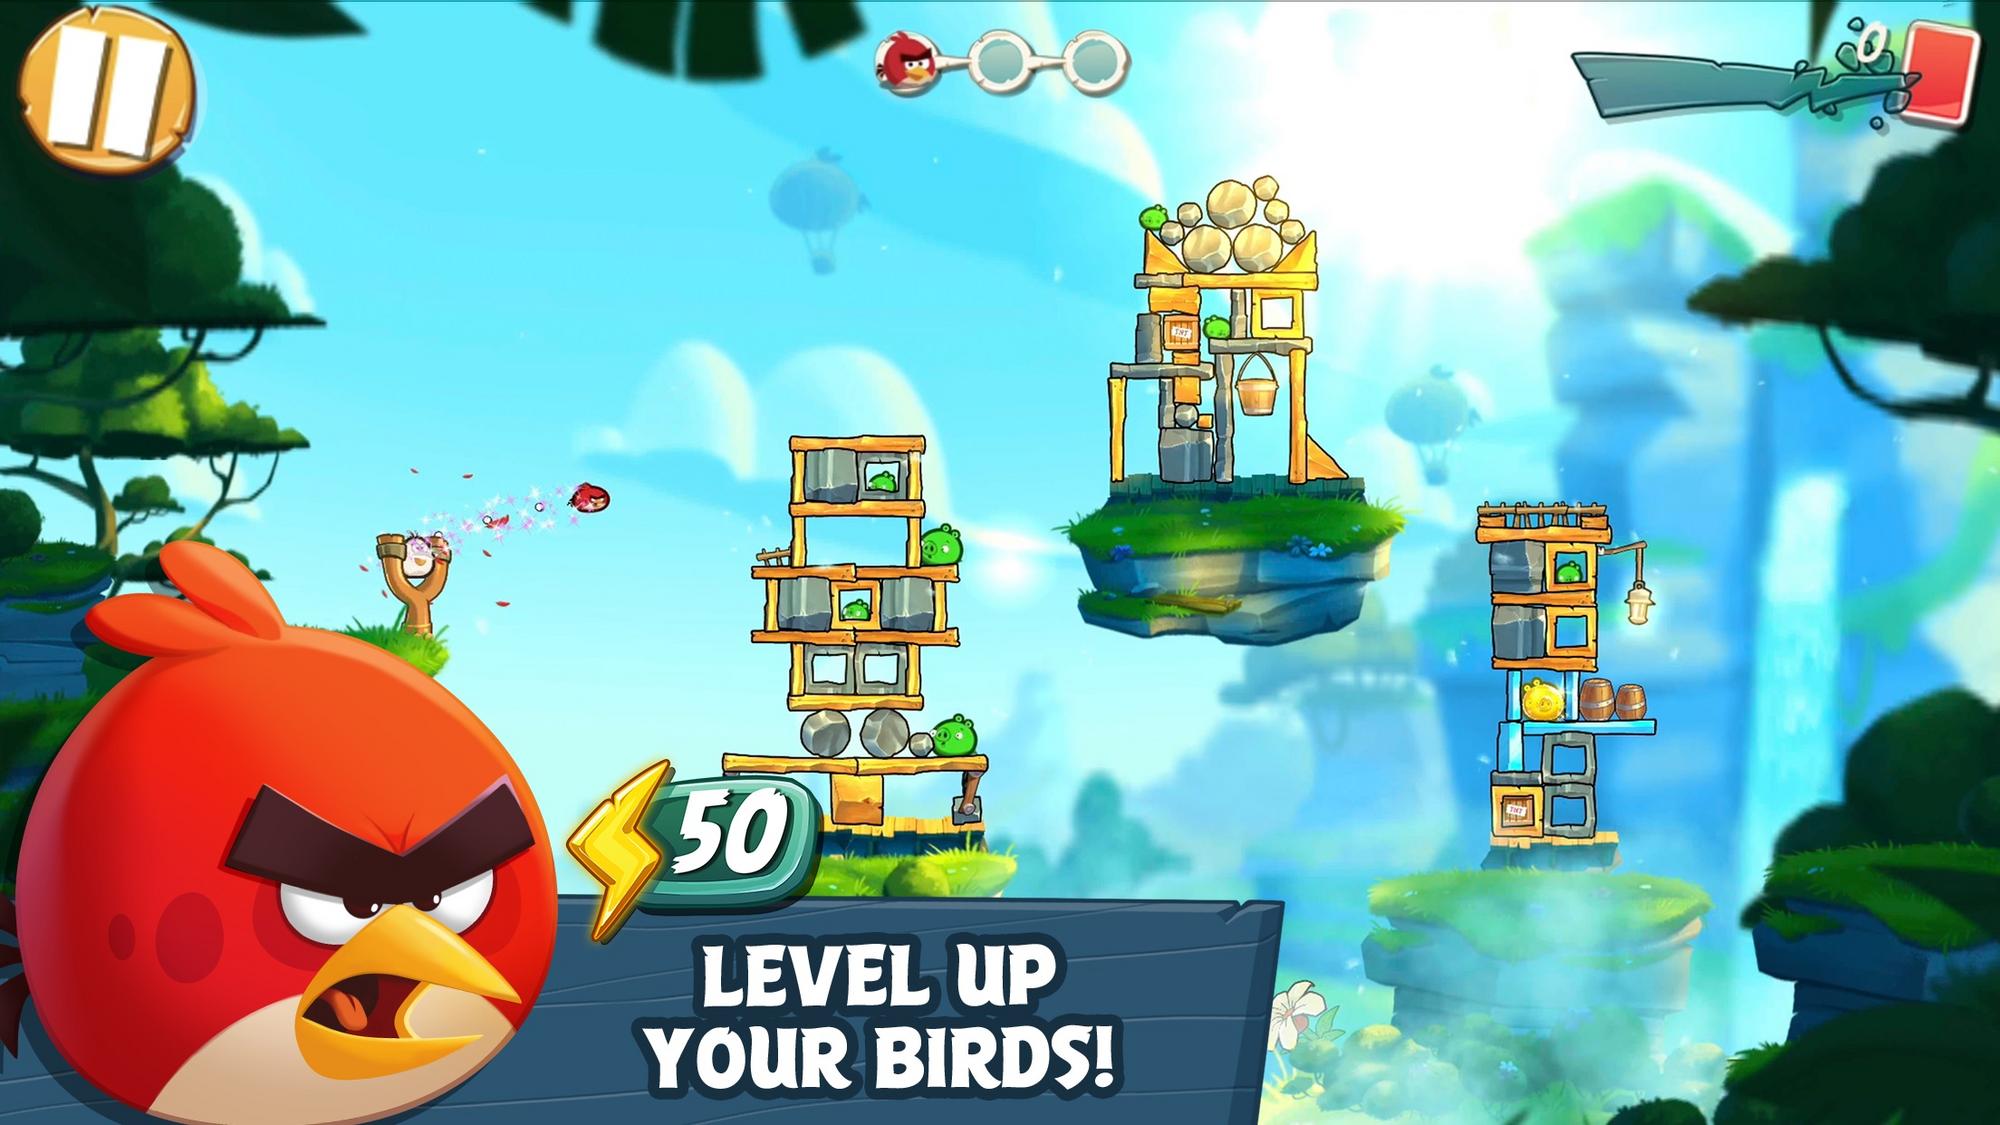 Oficiálny obrázok z hry Angry Birds 2.